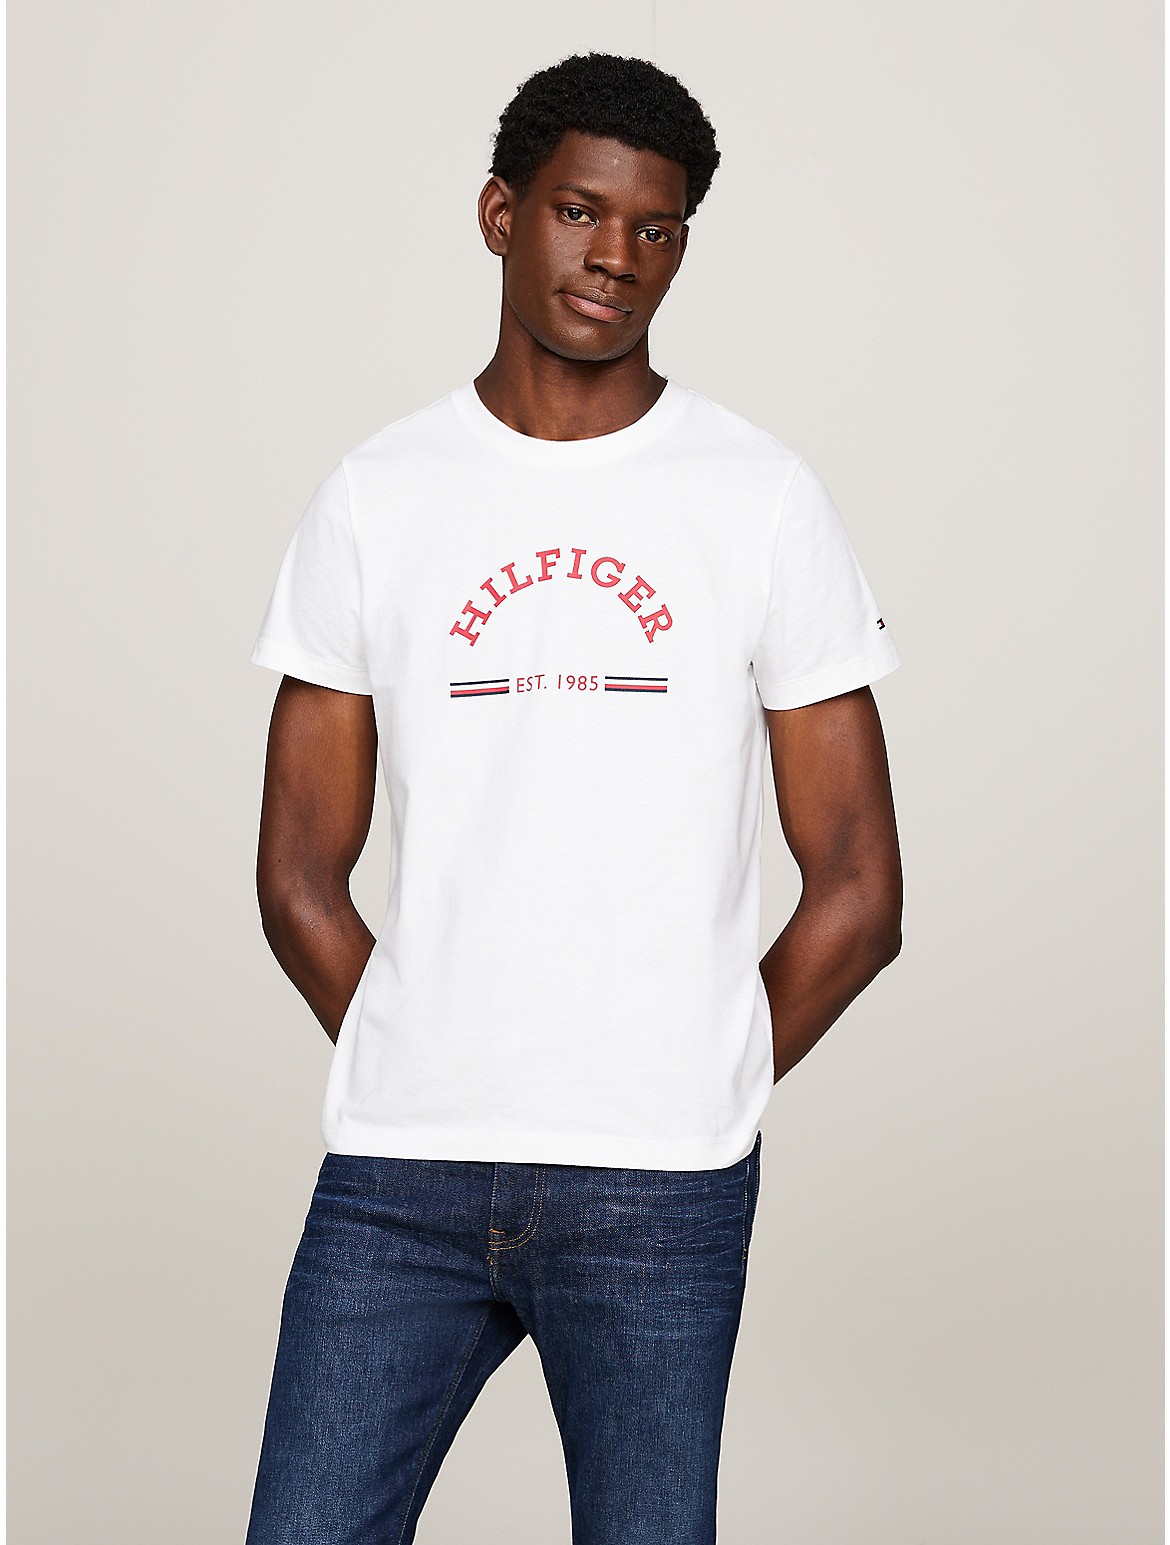 Tommy Hilfiger Men's Slim Fit Arch Monotype Graphic T-Shirt